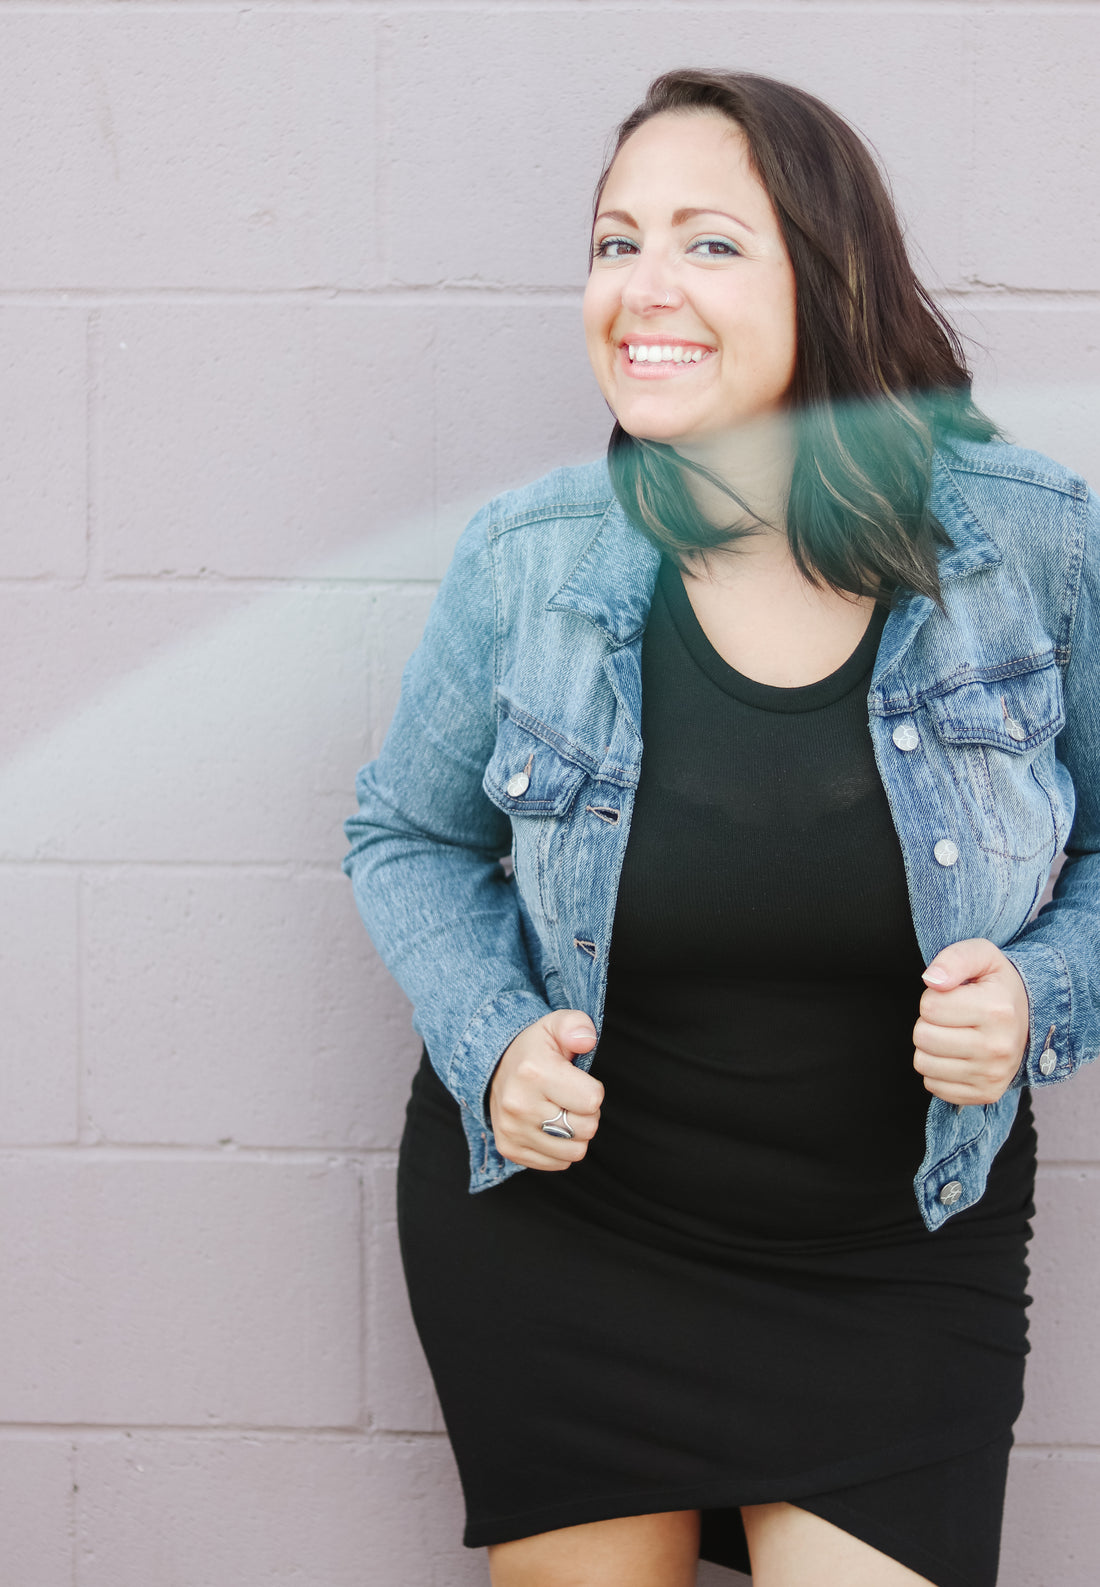 Meet Megan, the maker at Blue Jeans & Pearls